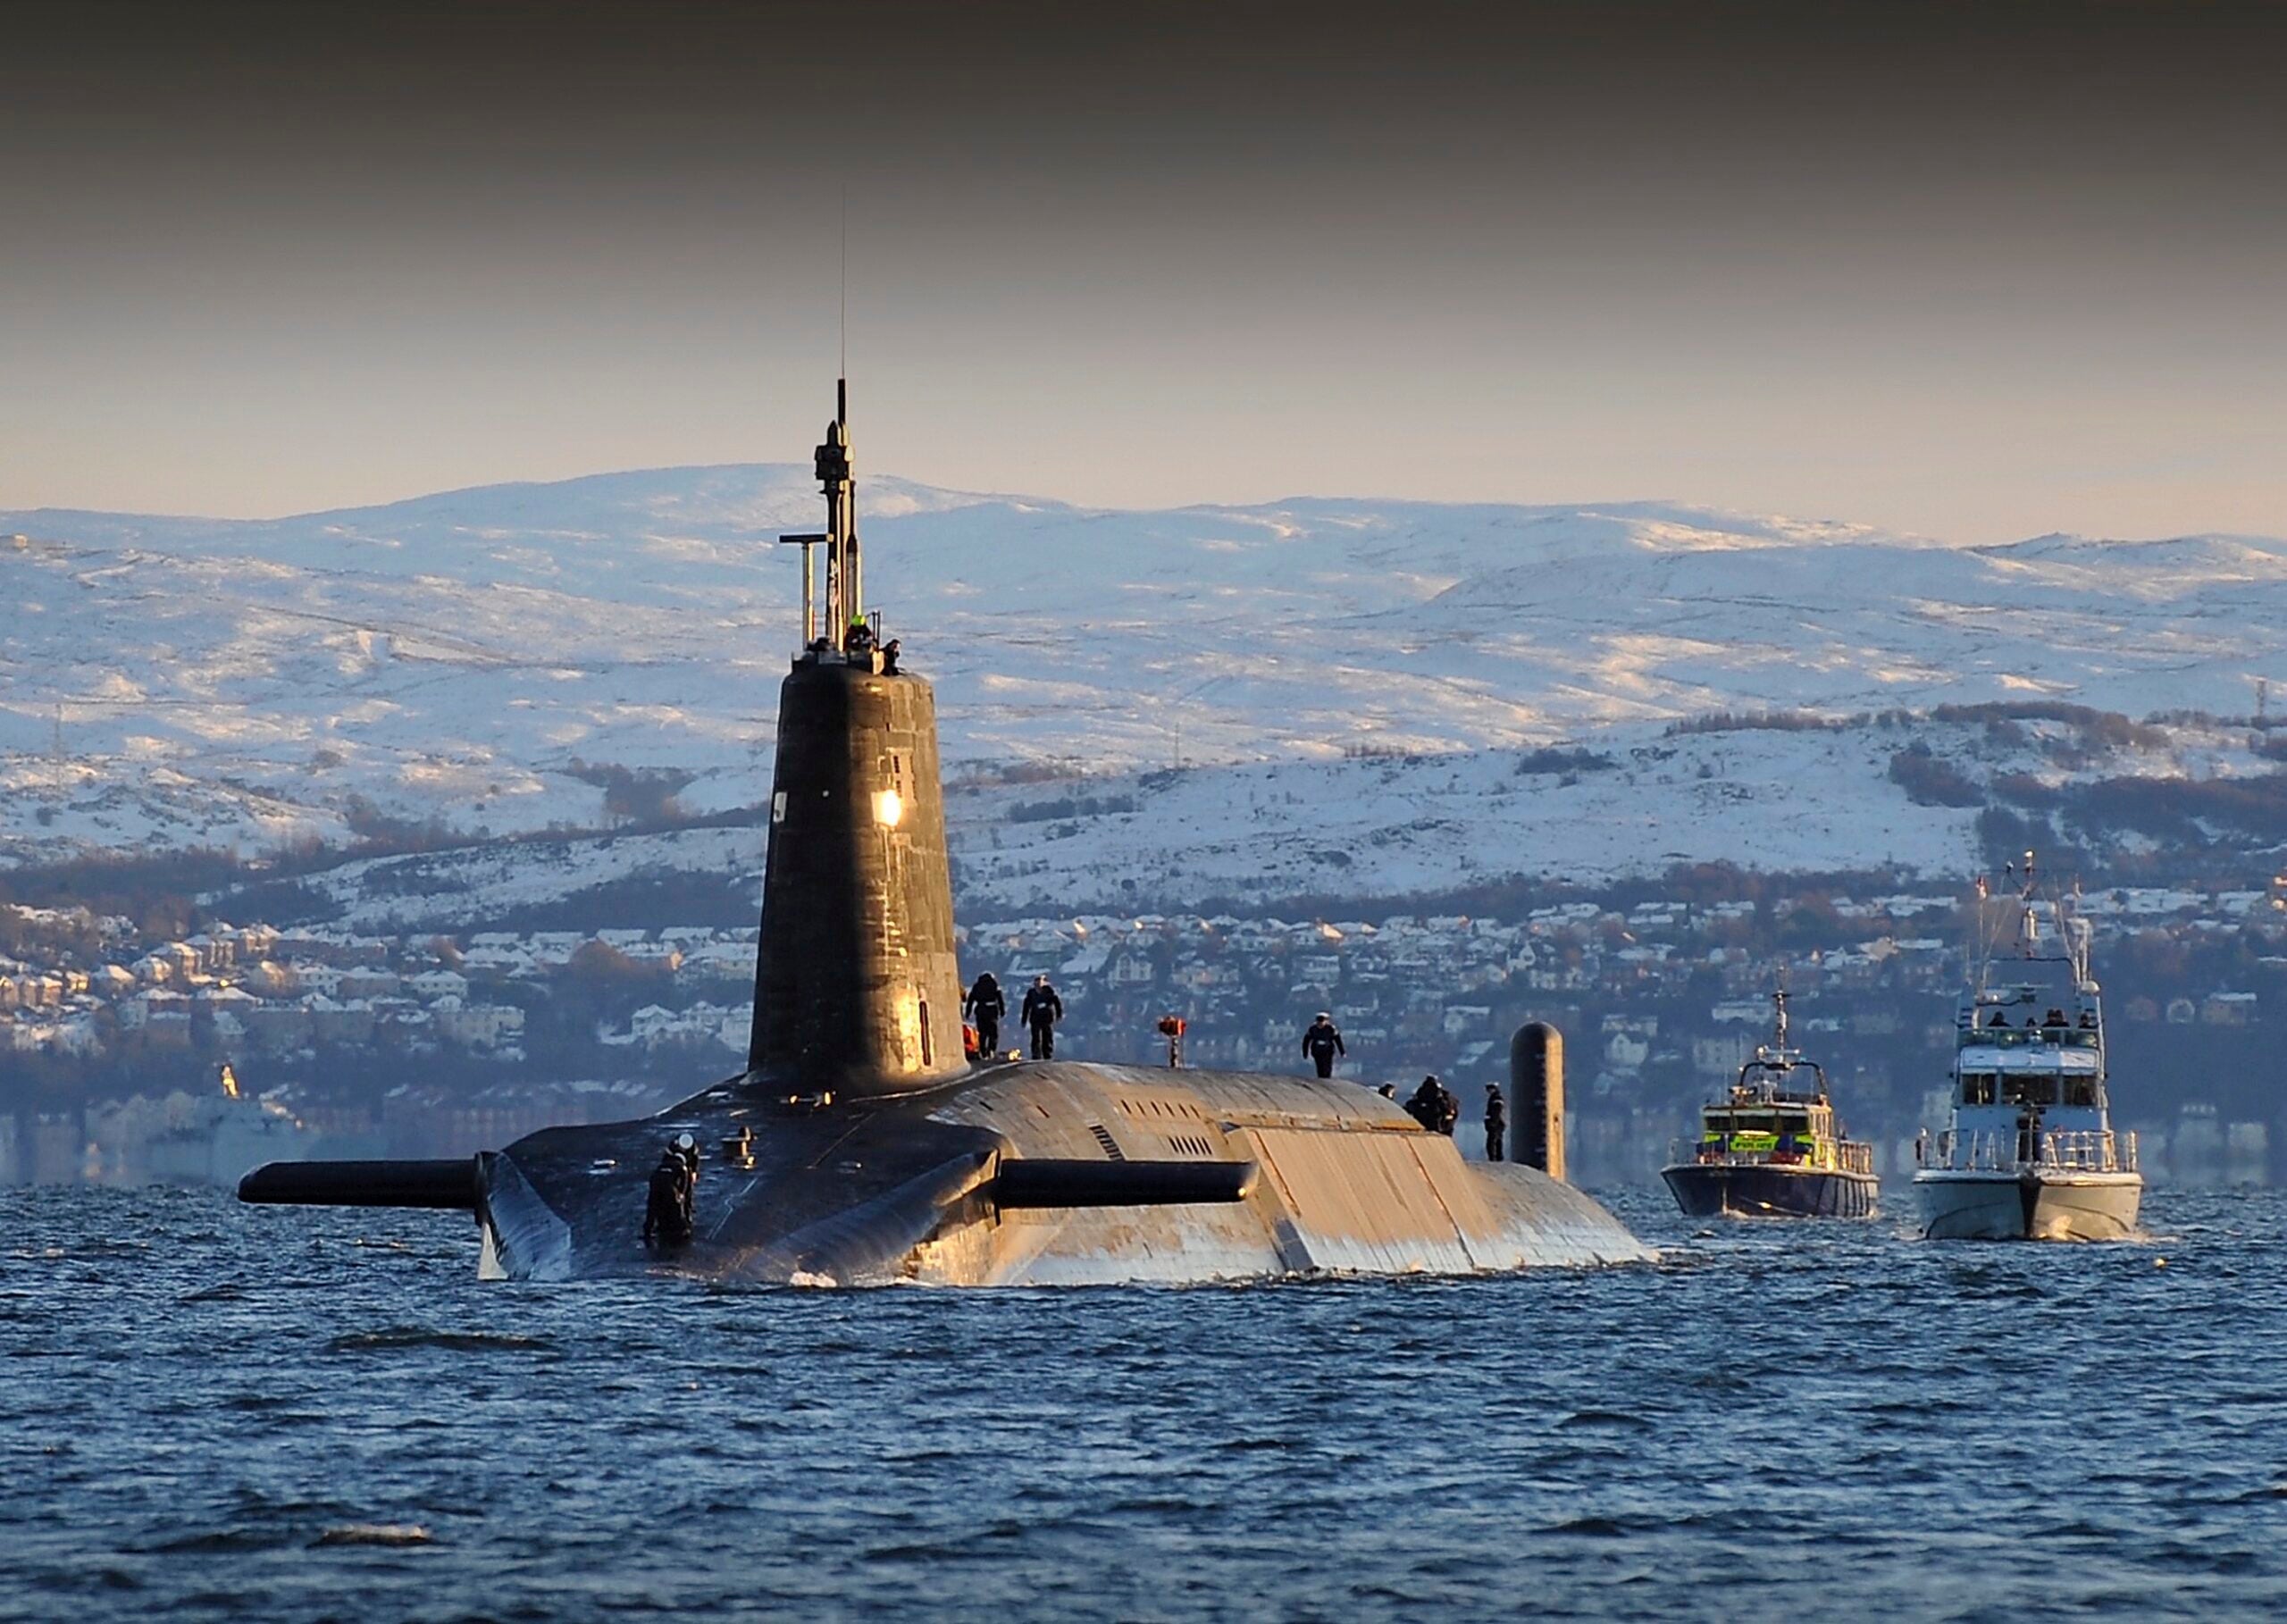 Nuclear submarine HMS Vanguard arrives back at HM Naval Base Clyde, Faslane, Scotland following a patrol.